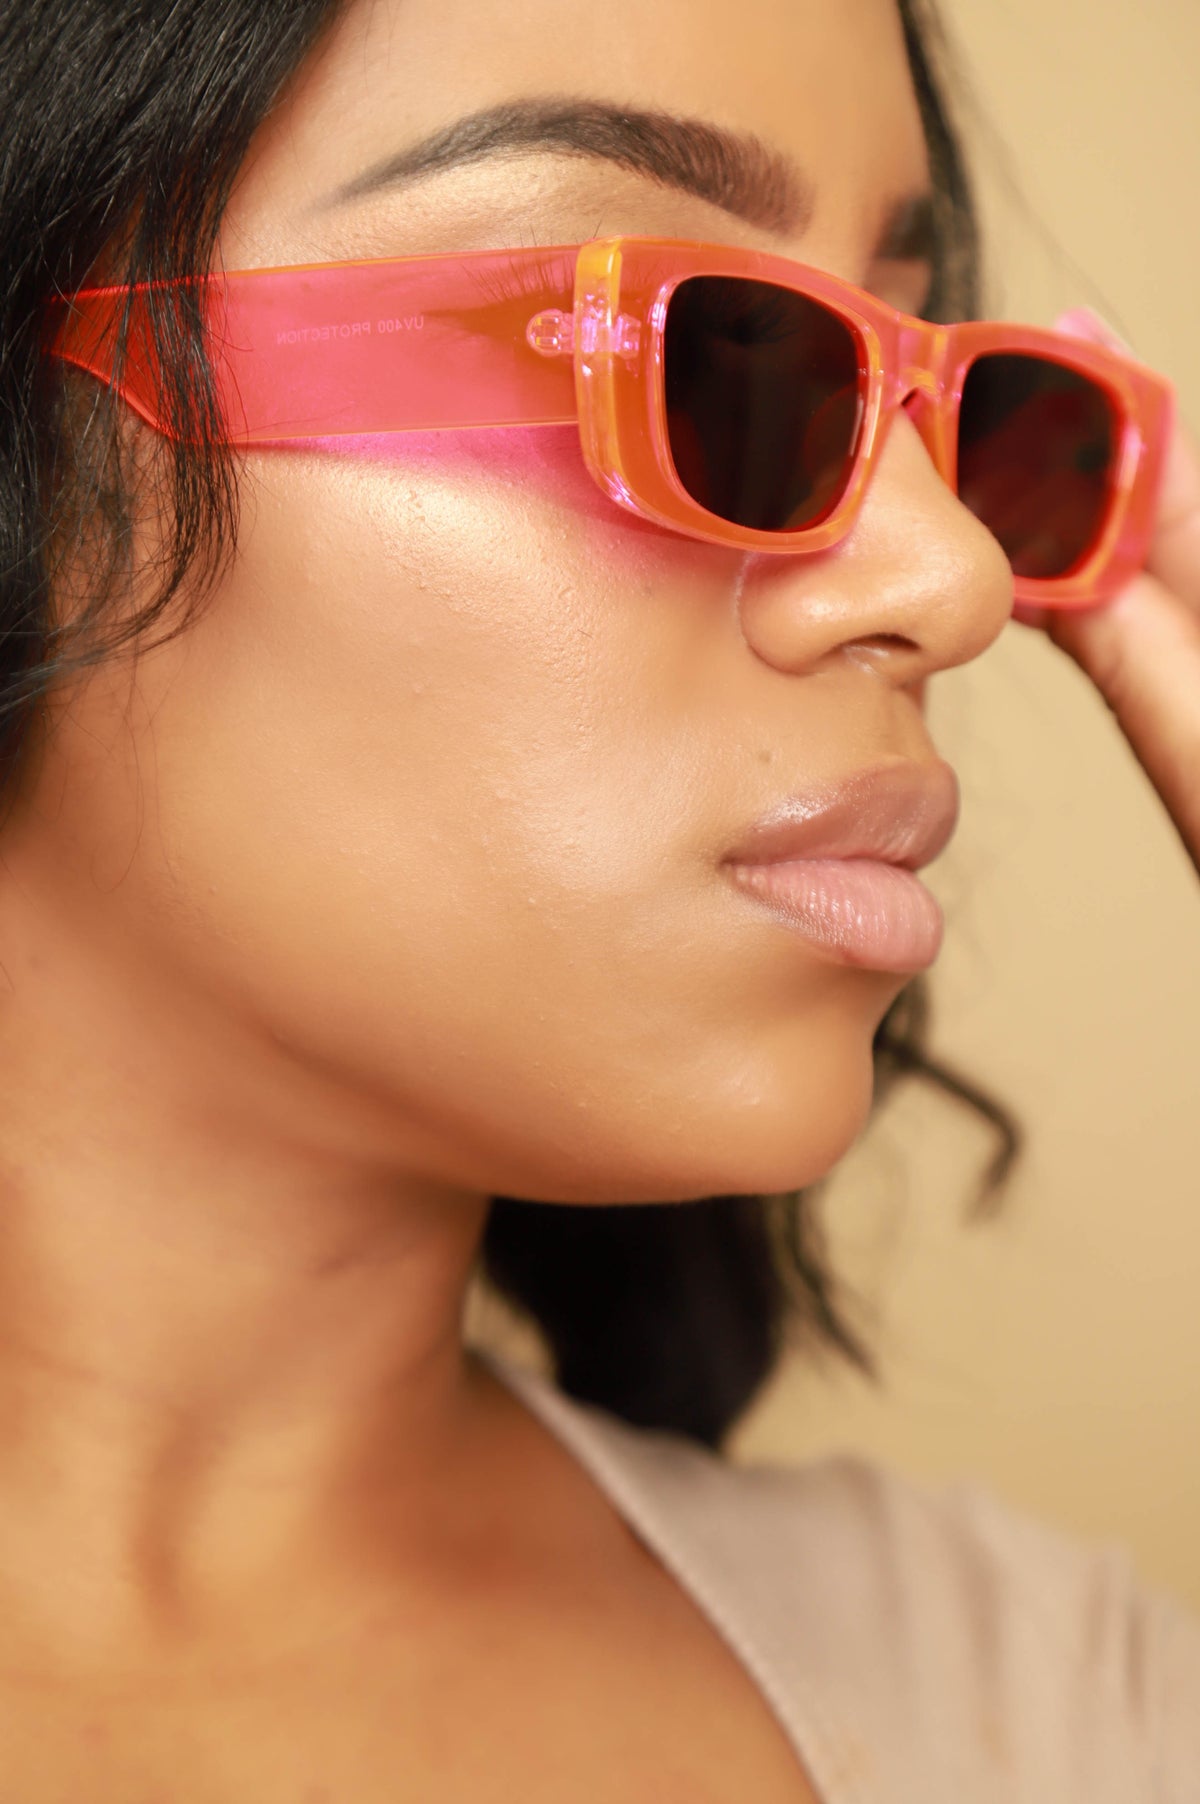 
              Blinding Lights Fluorescent Sunglasses - Neon Pink - Swank A Posh
            